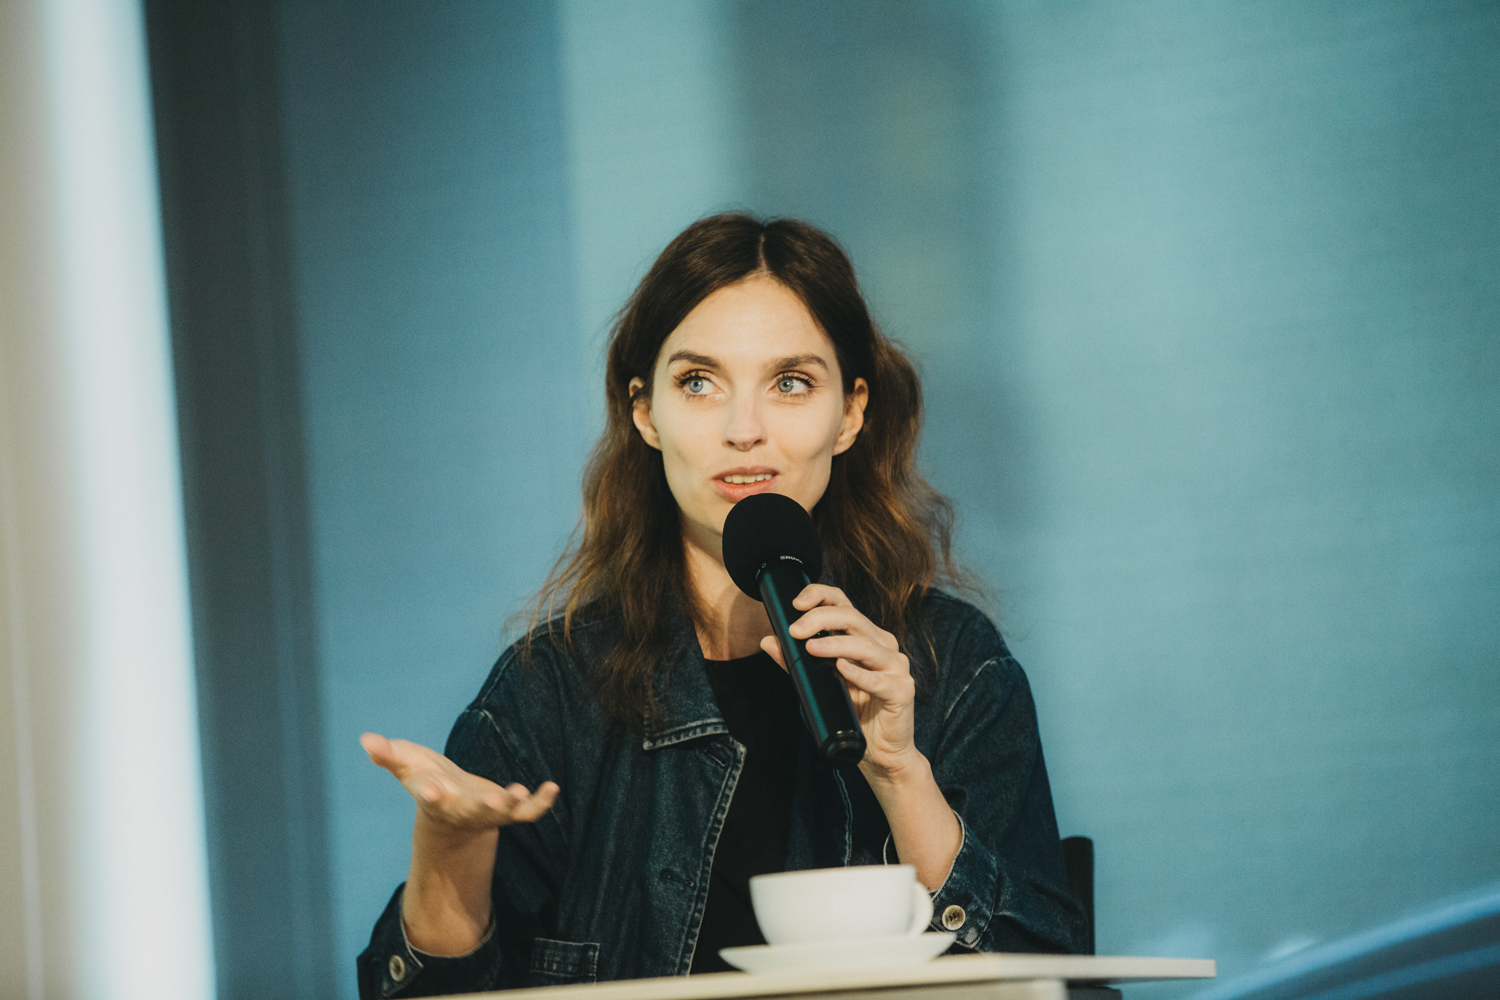 MEET THE COMPOSER AND COMPOSITION WORKSHOPS: Gísladóttir, Austrian Cultural Forum 